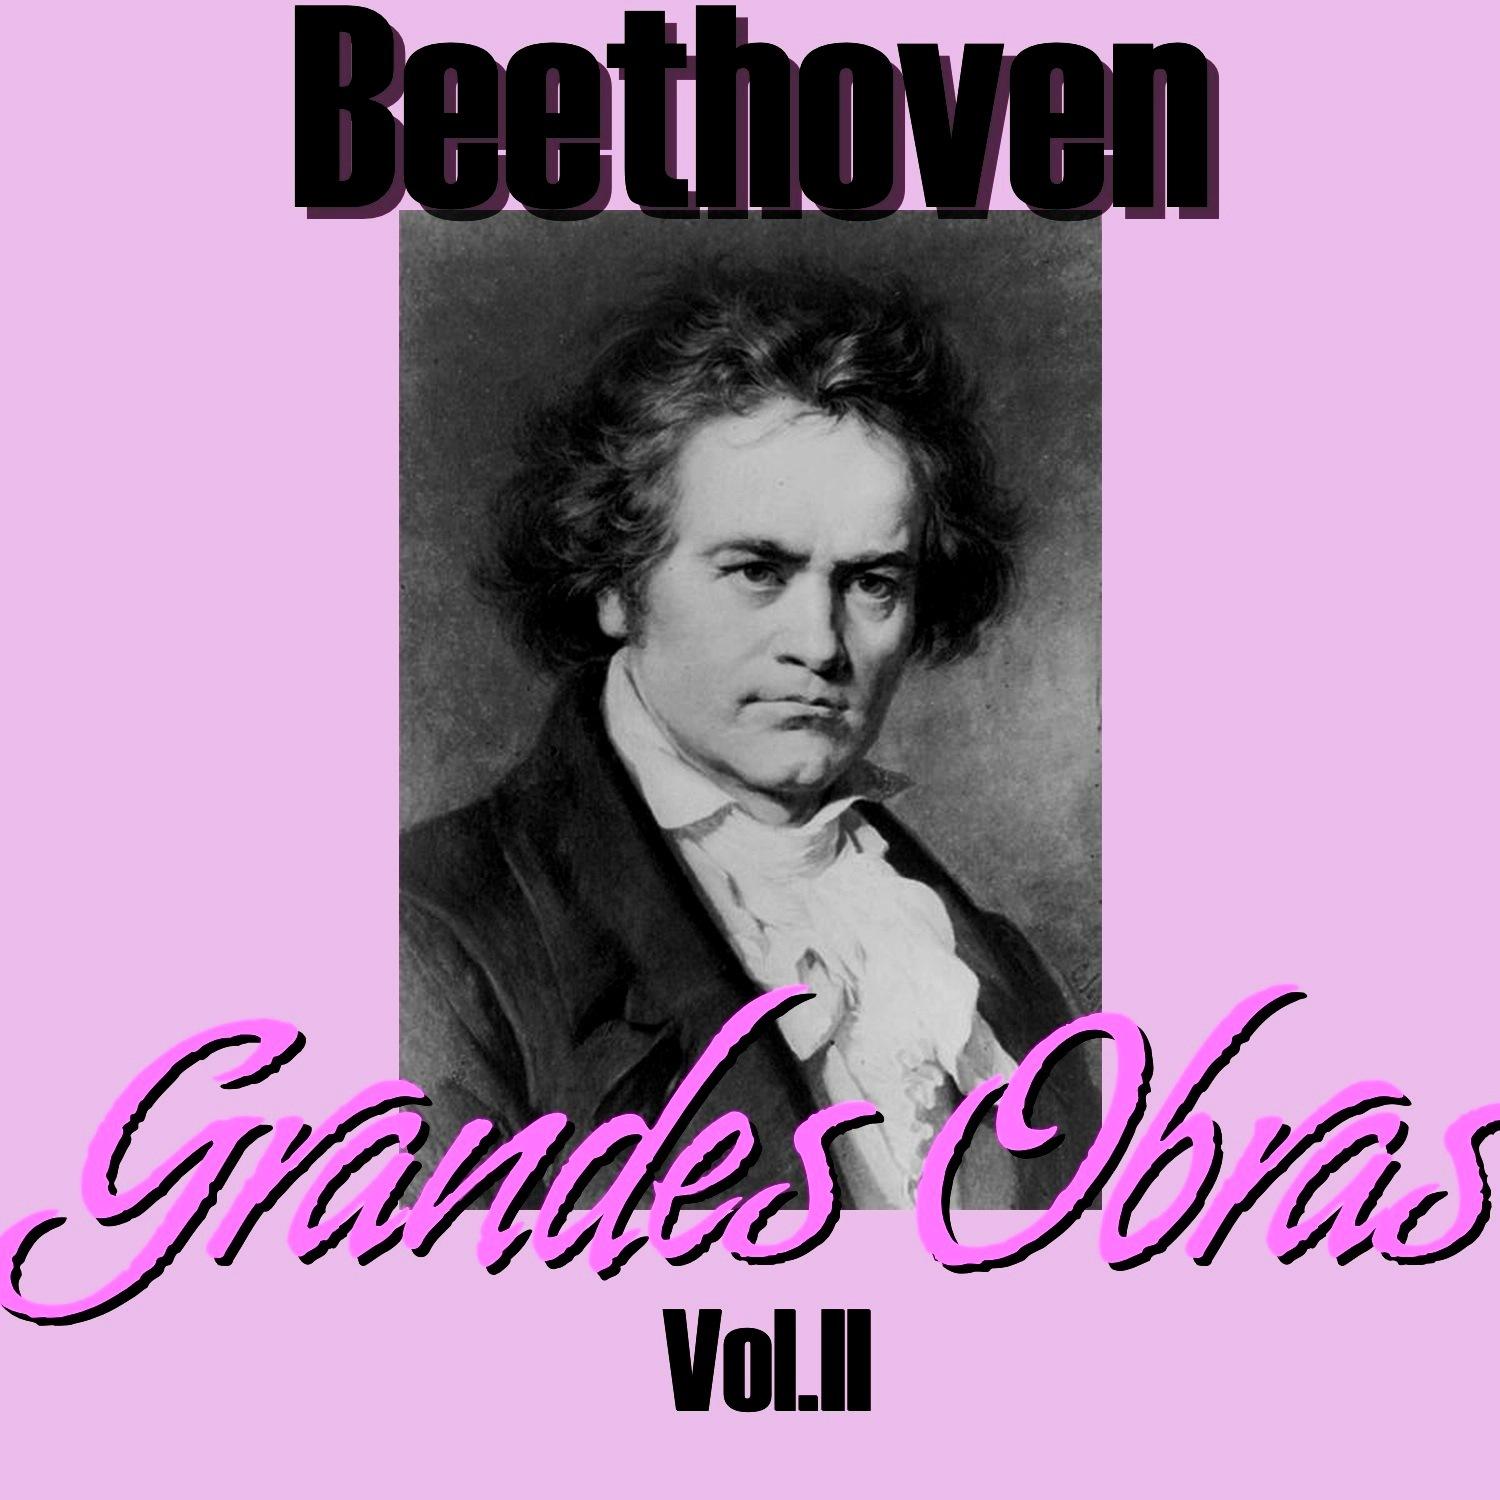 Beethoven Grandes Obras Vol.II